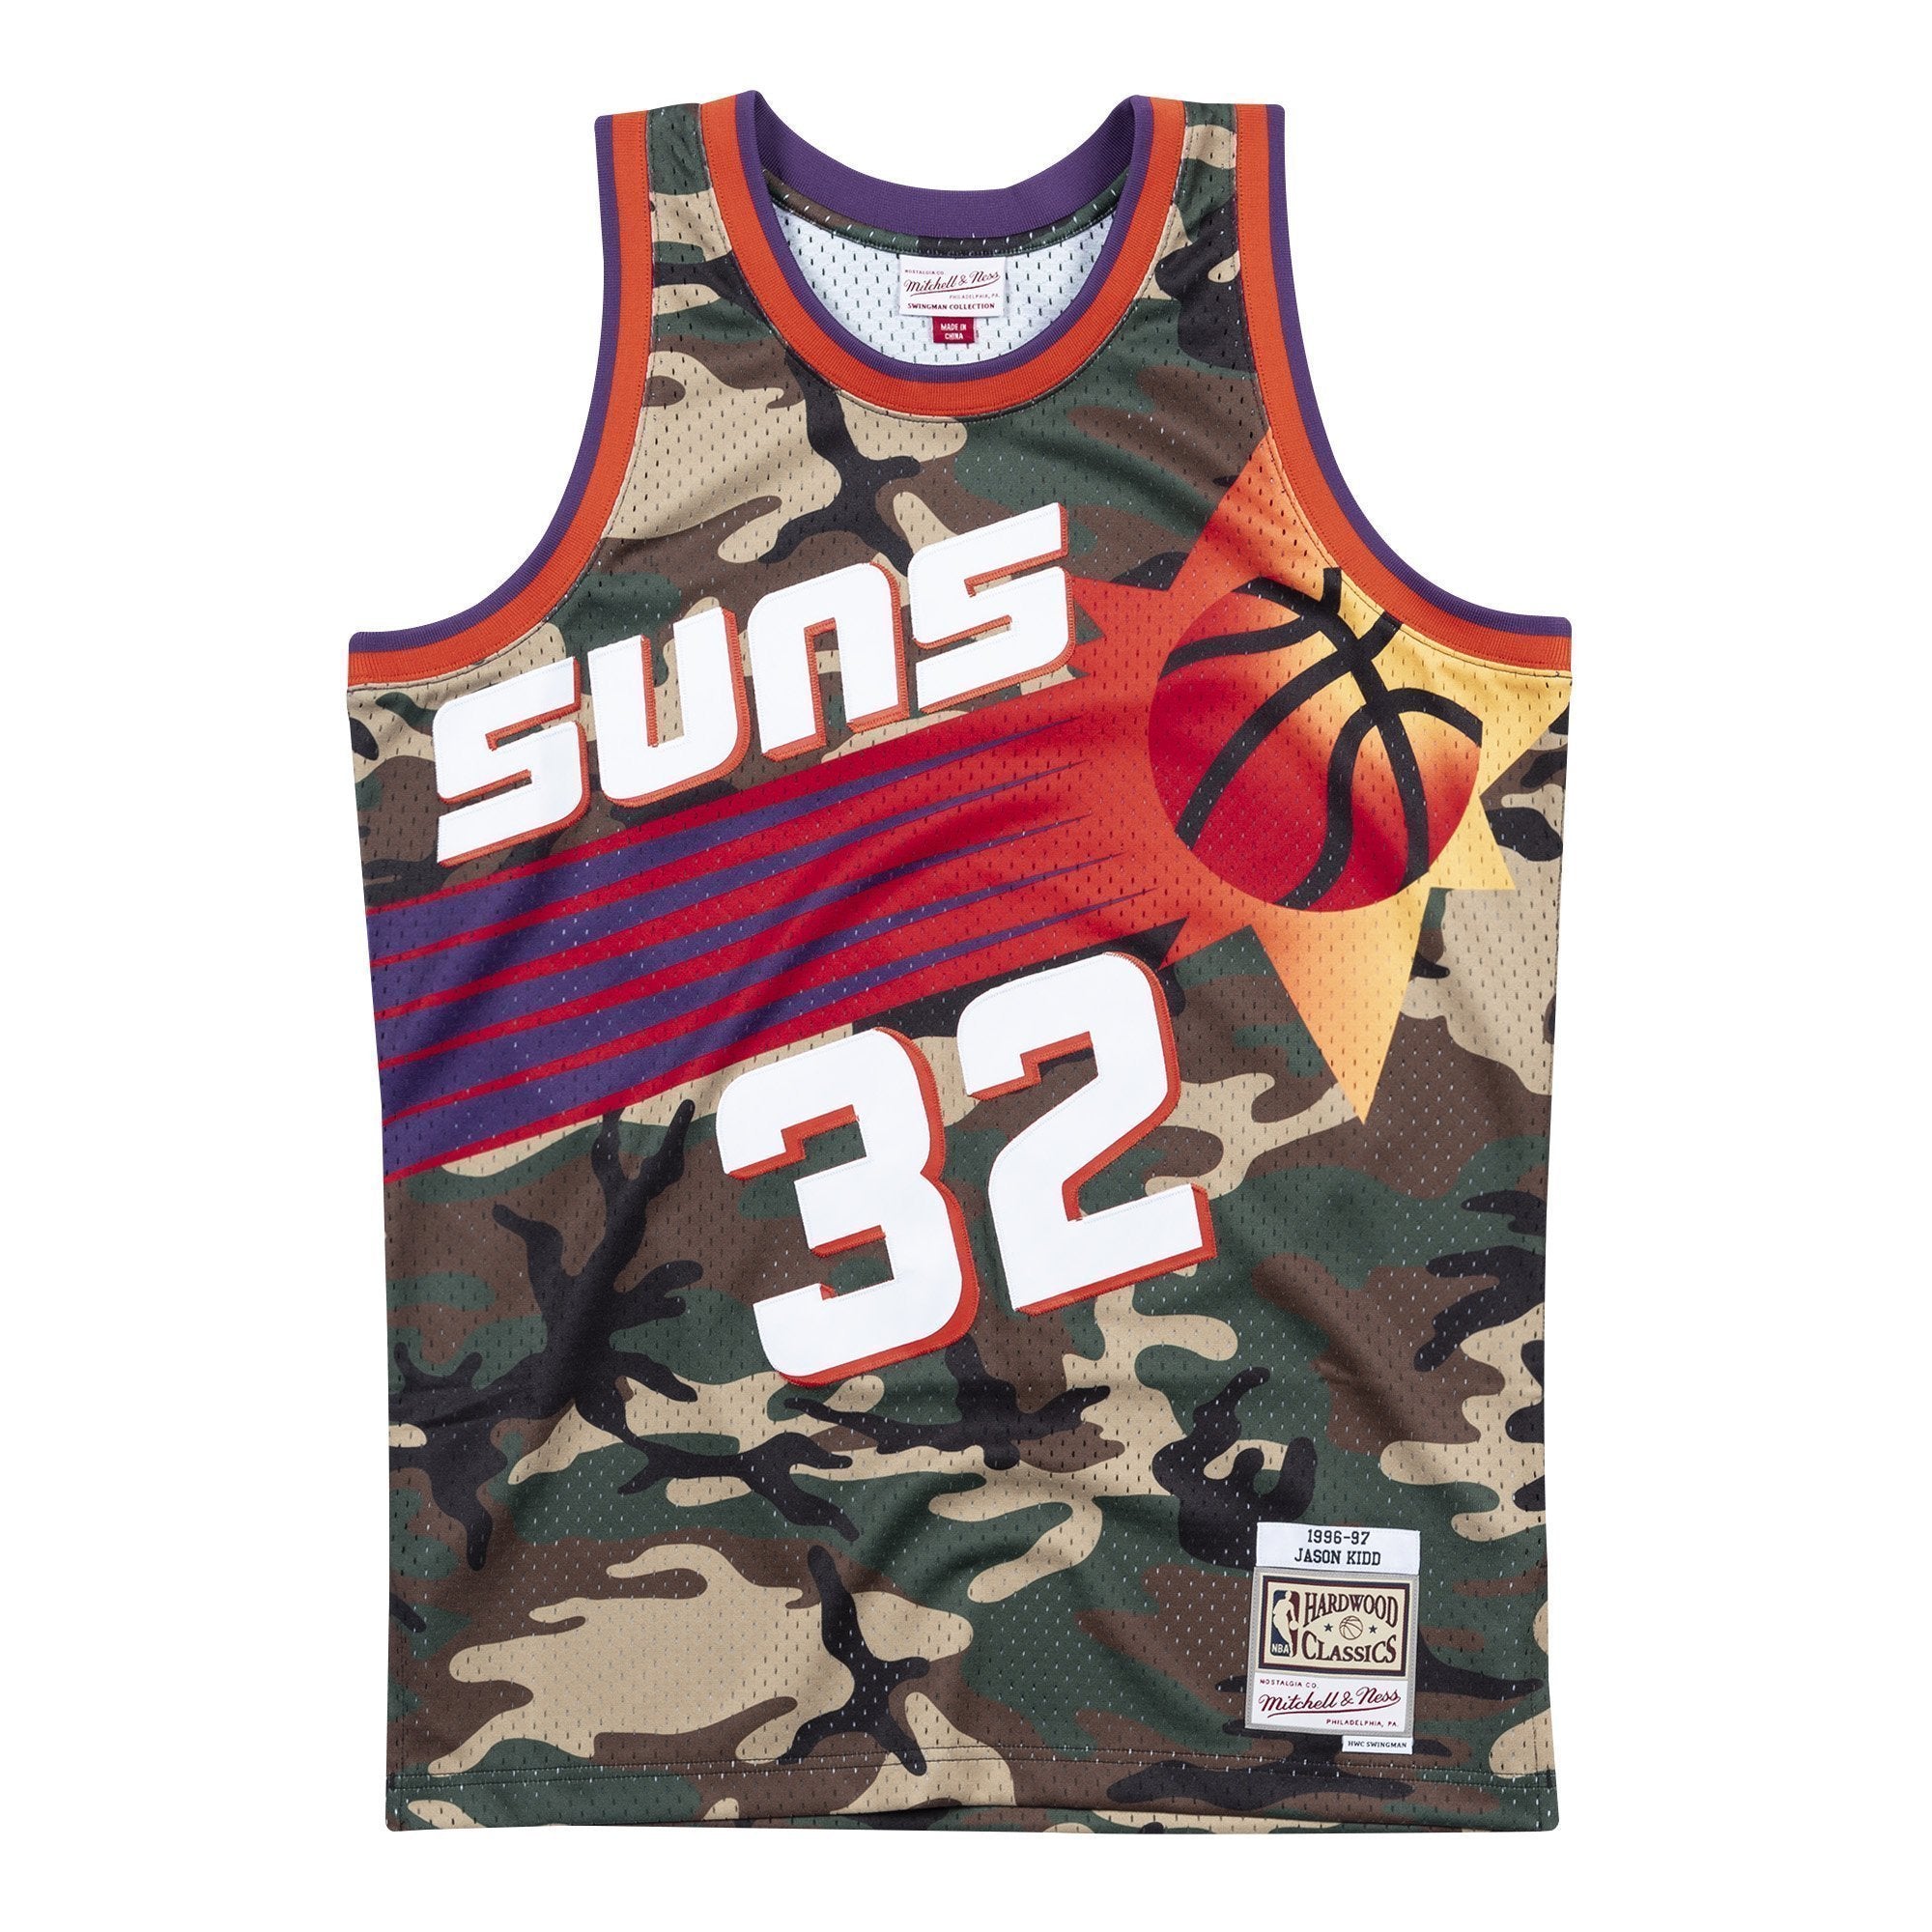 Jason Kidd Phoenix Suns NBA Fan Apparel & Souvenirs for sale